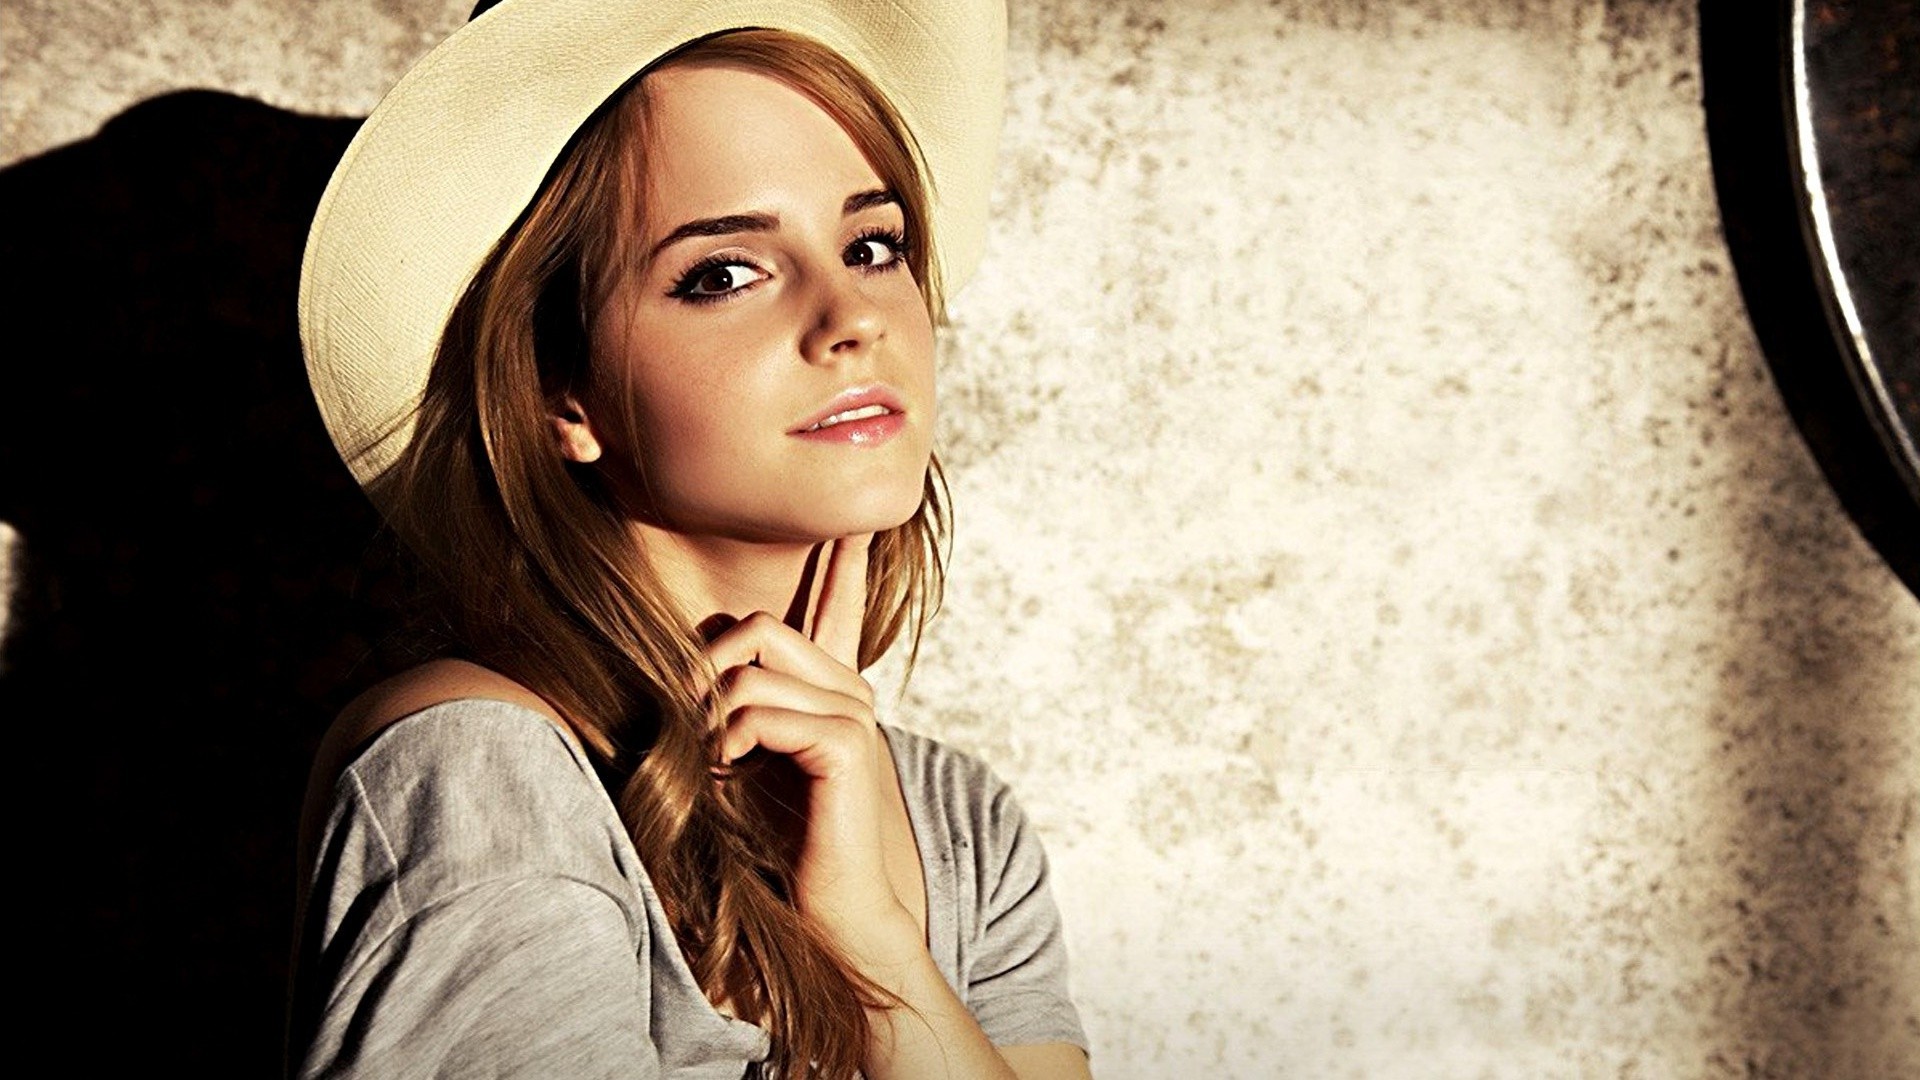 Emma Watson Wallpapers Free Celebrities Wallpaper - Rakaruan.com